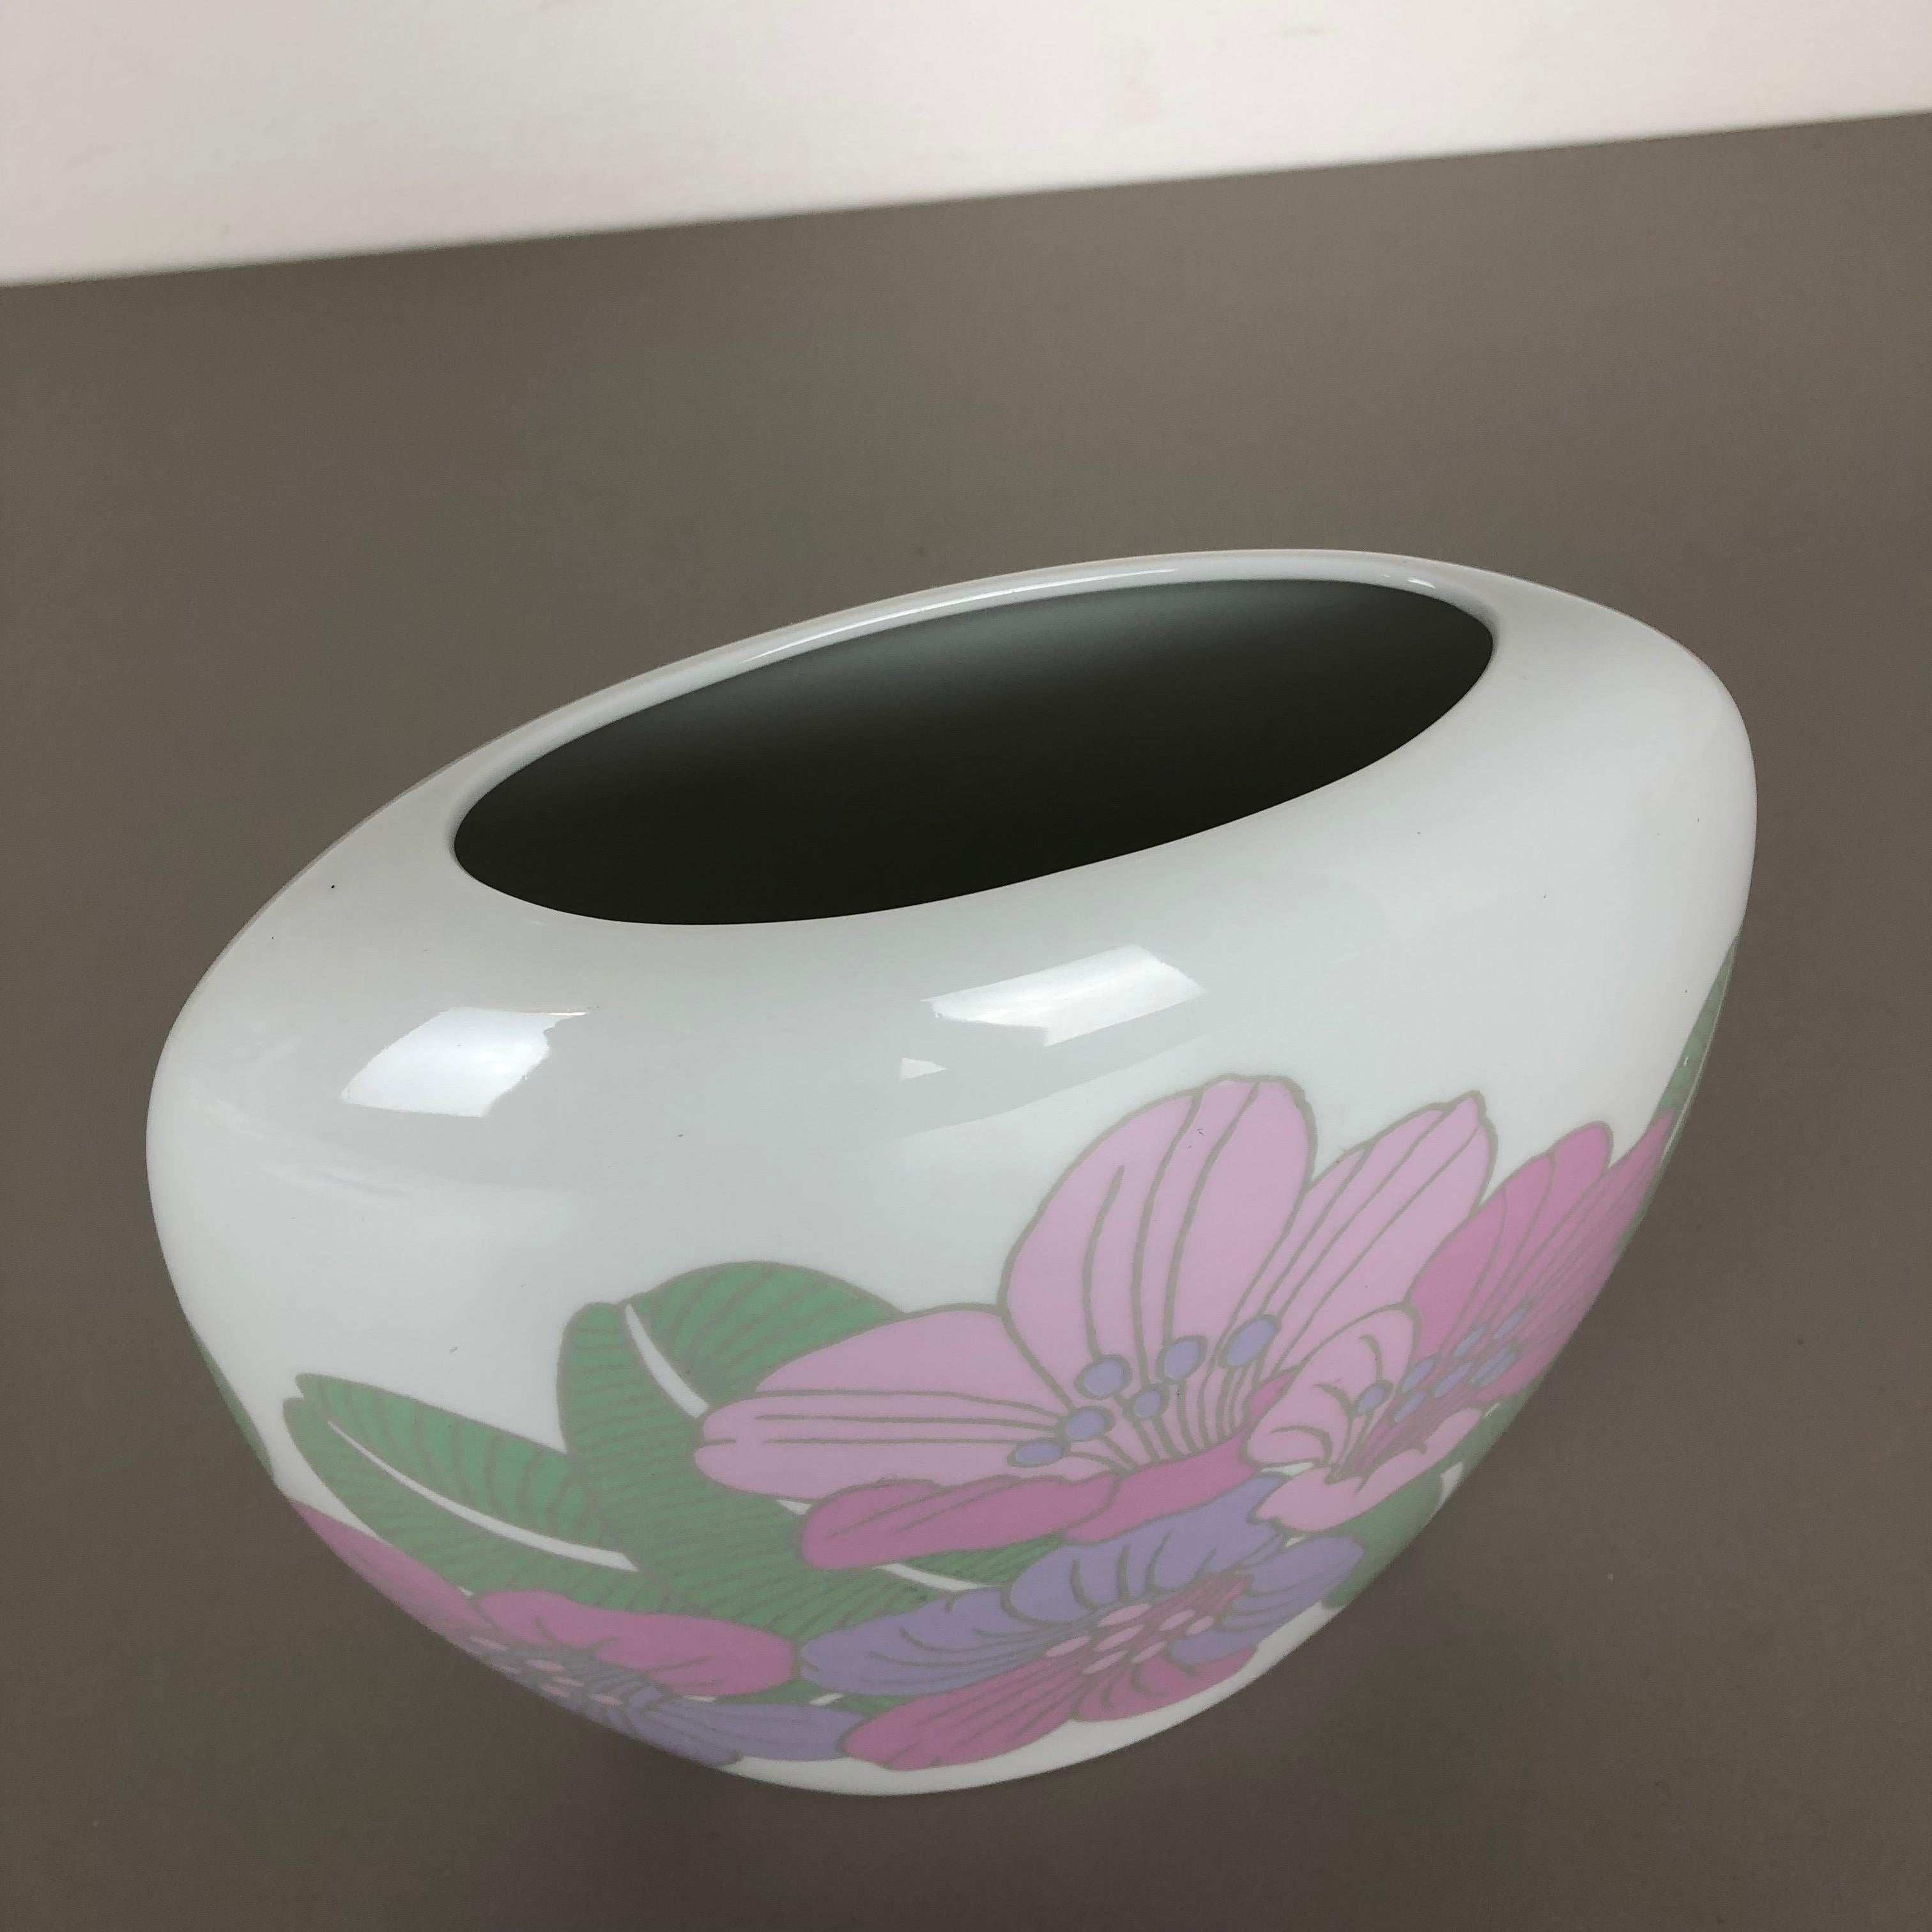 Colorful 1970s Art Vase Porcelain Vase Rosemonde Nairac for Rosenthal Germany For Sale 4